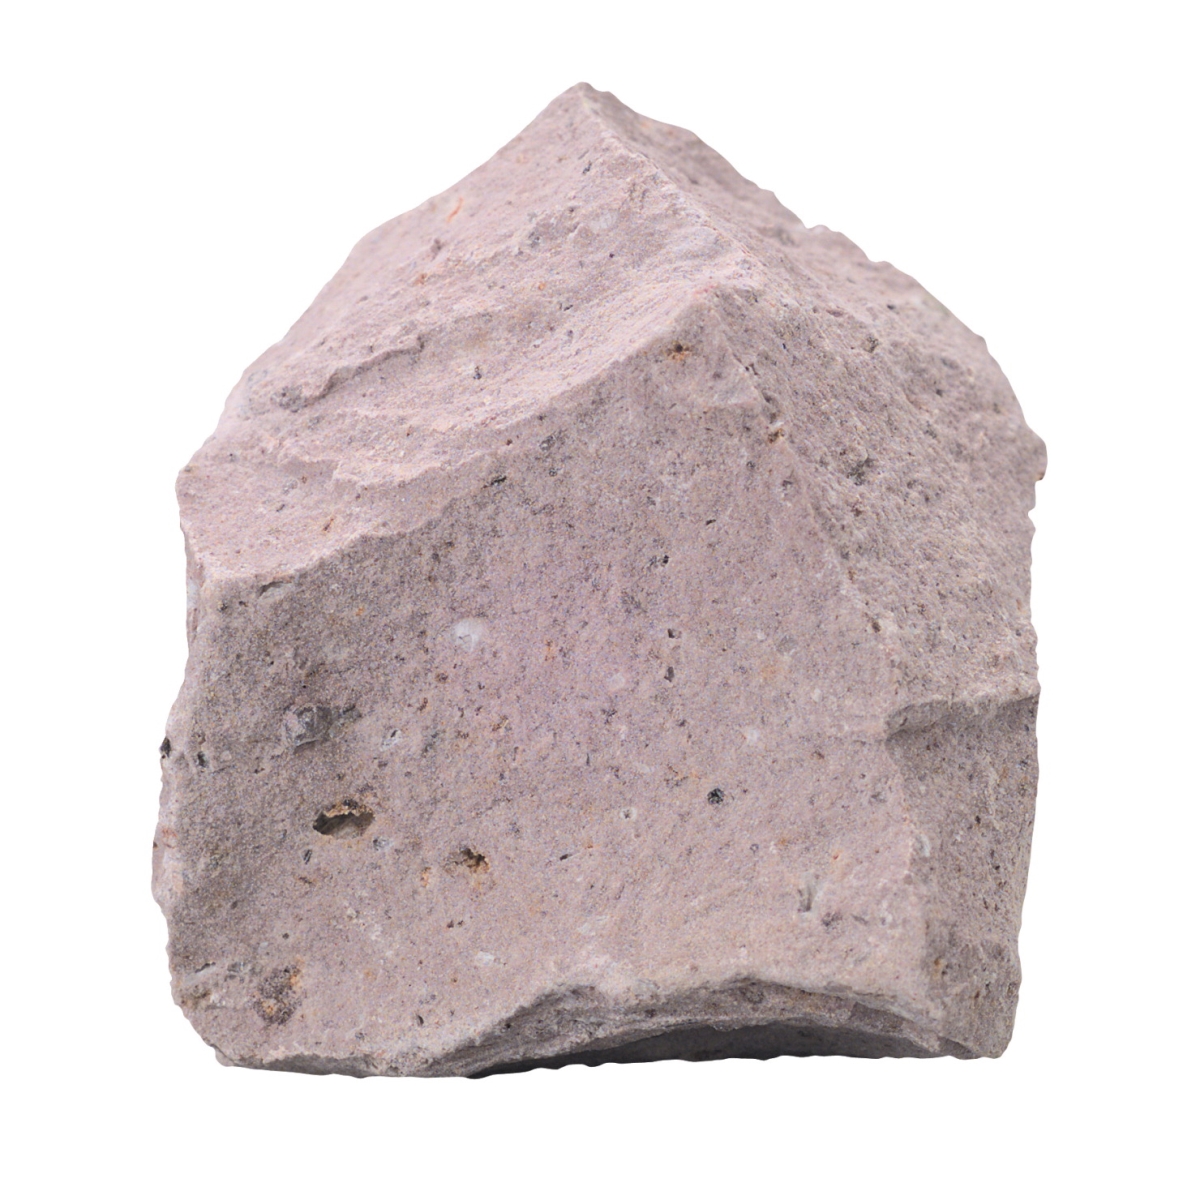 586345 Scott Resources Hand Sample Fine-grained Rhyolite Igneous